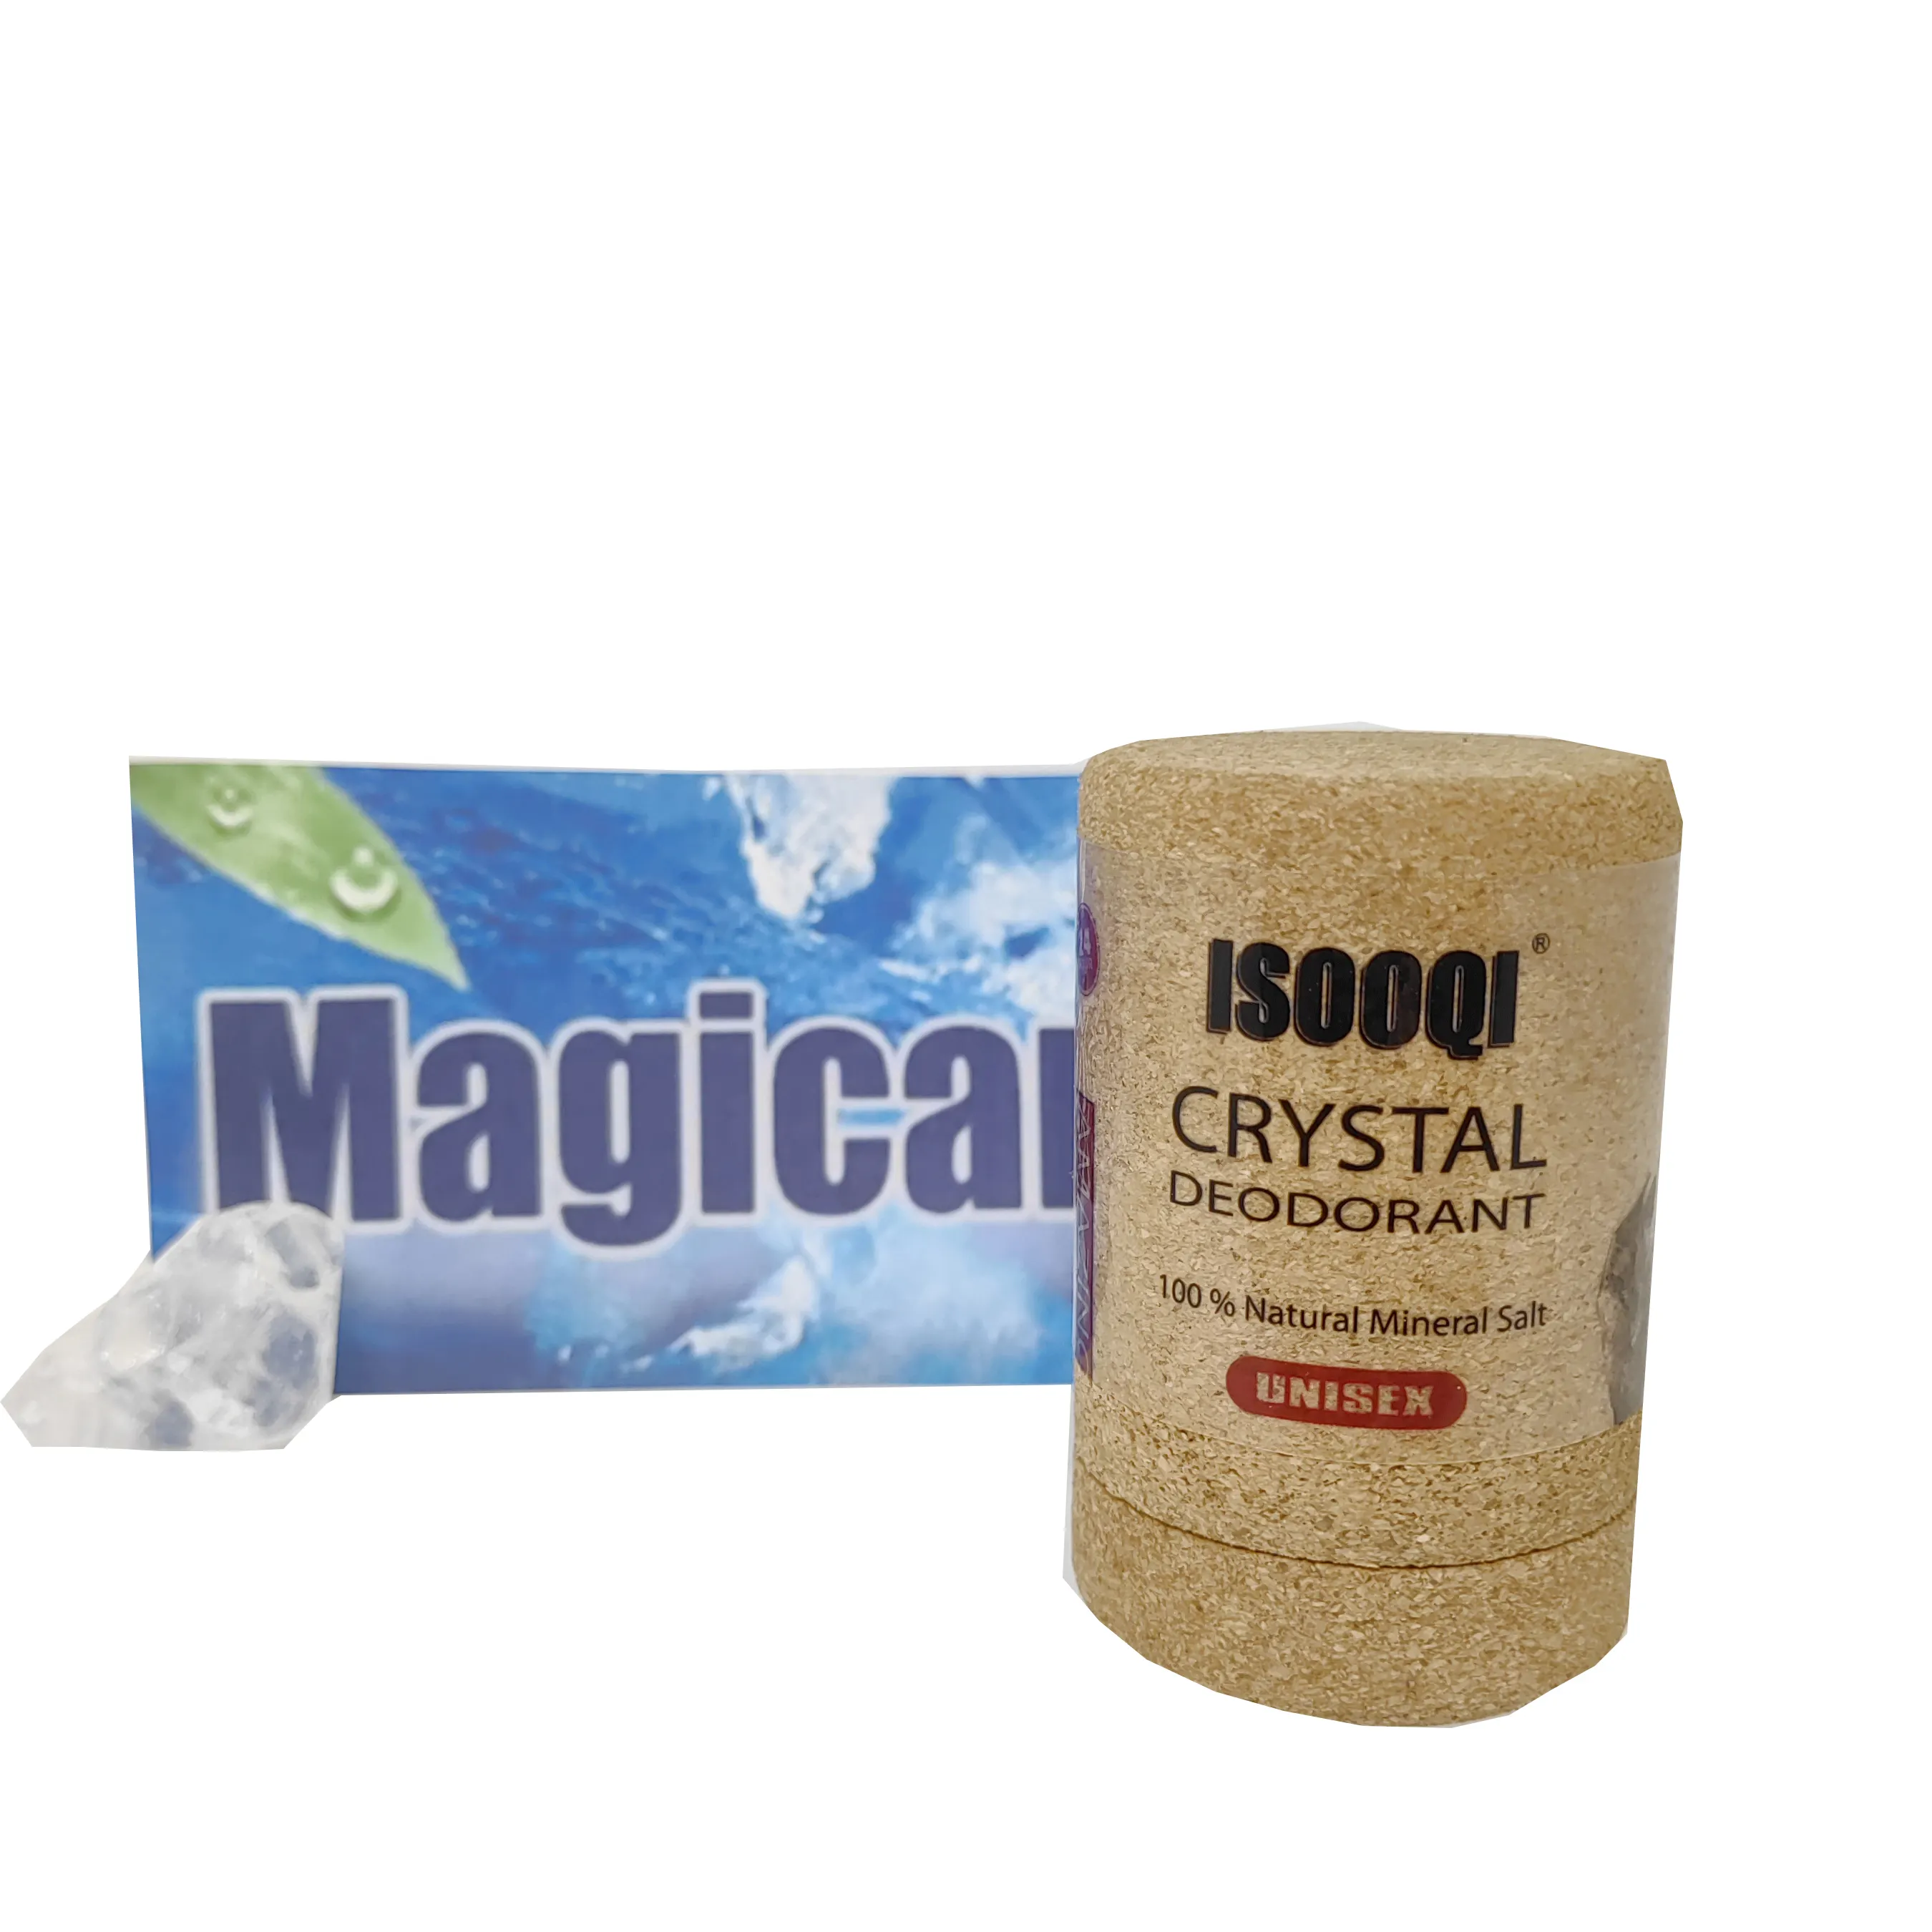 Magicare Alum Stone in cork Bio Nature Package калий кристаллический дезодорант 60 г горячий антиперспирант 120 г спрей OEM